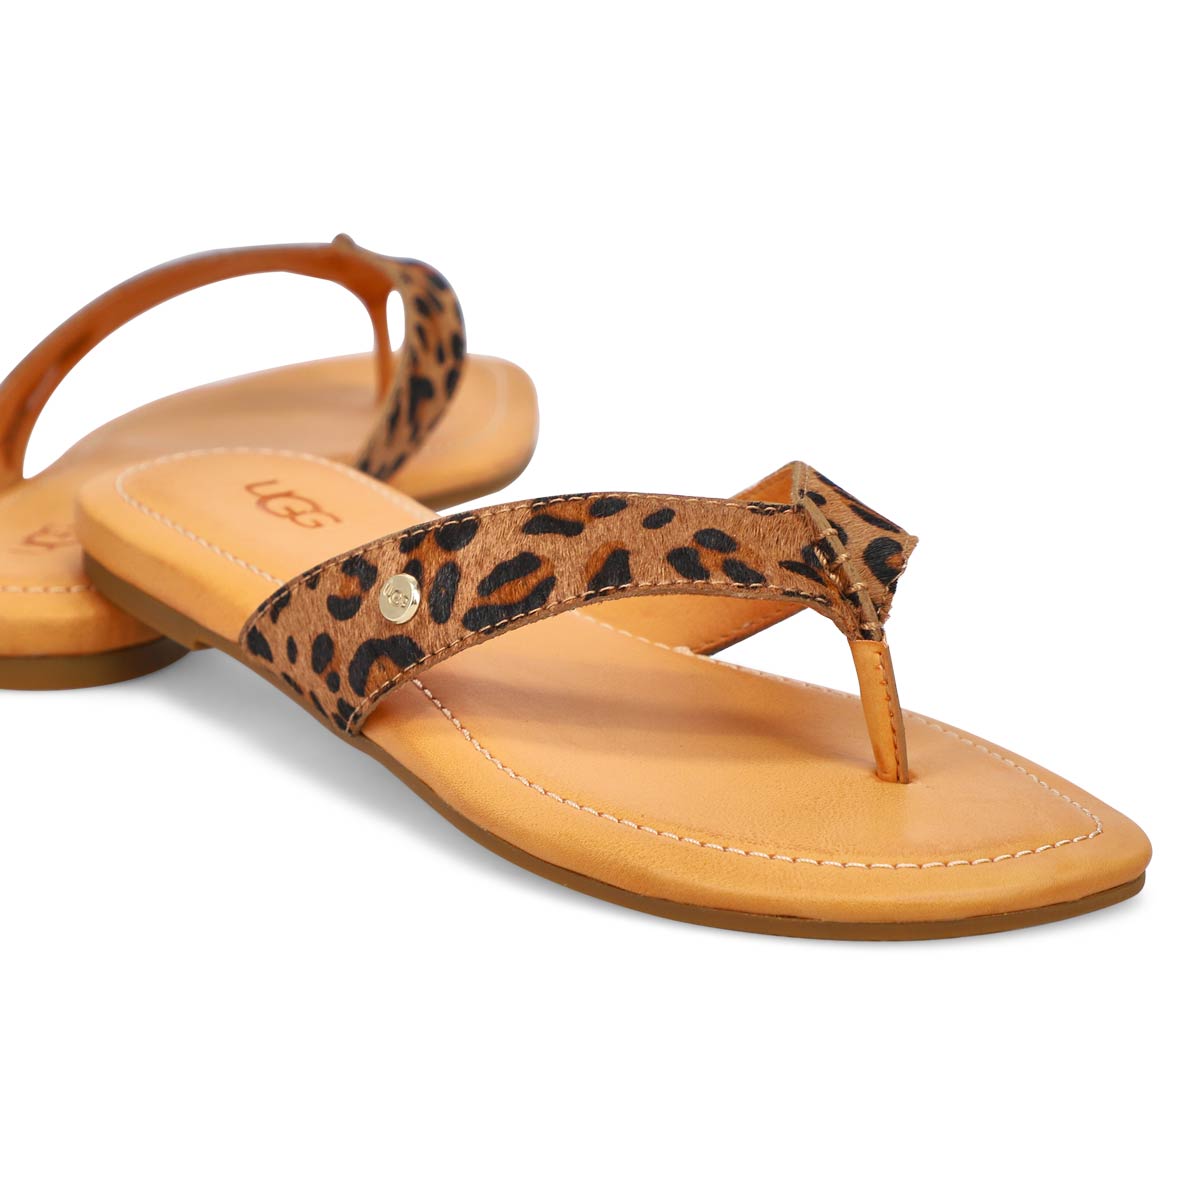 Women's Tuolumne Thong Sandal - Leopard Tan